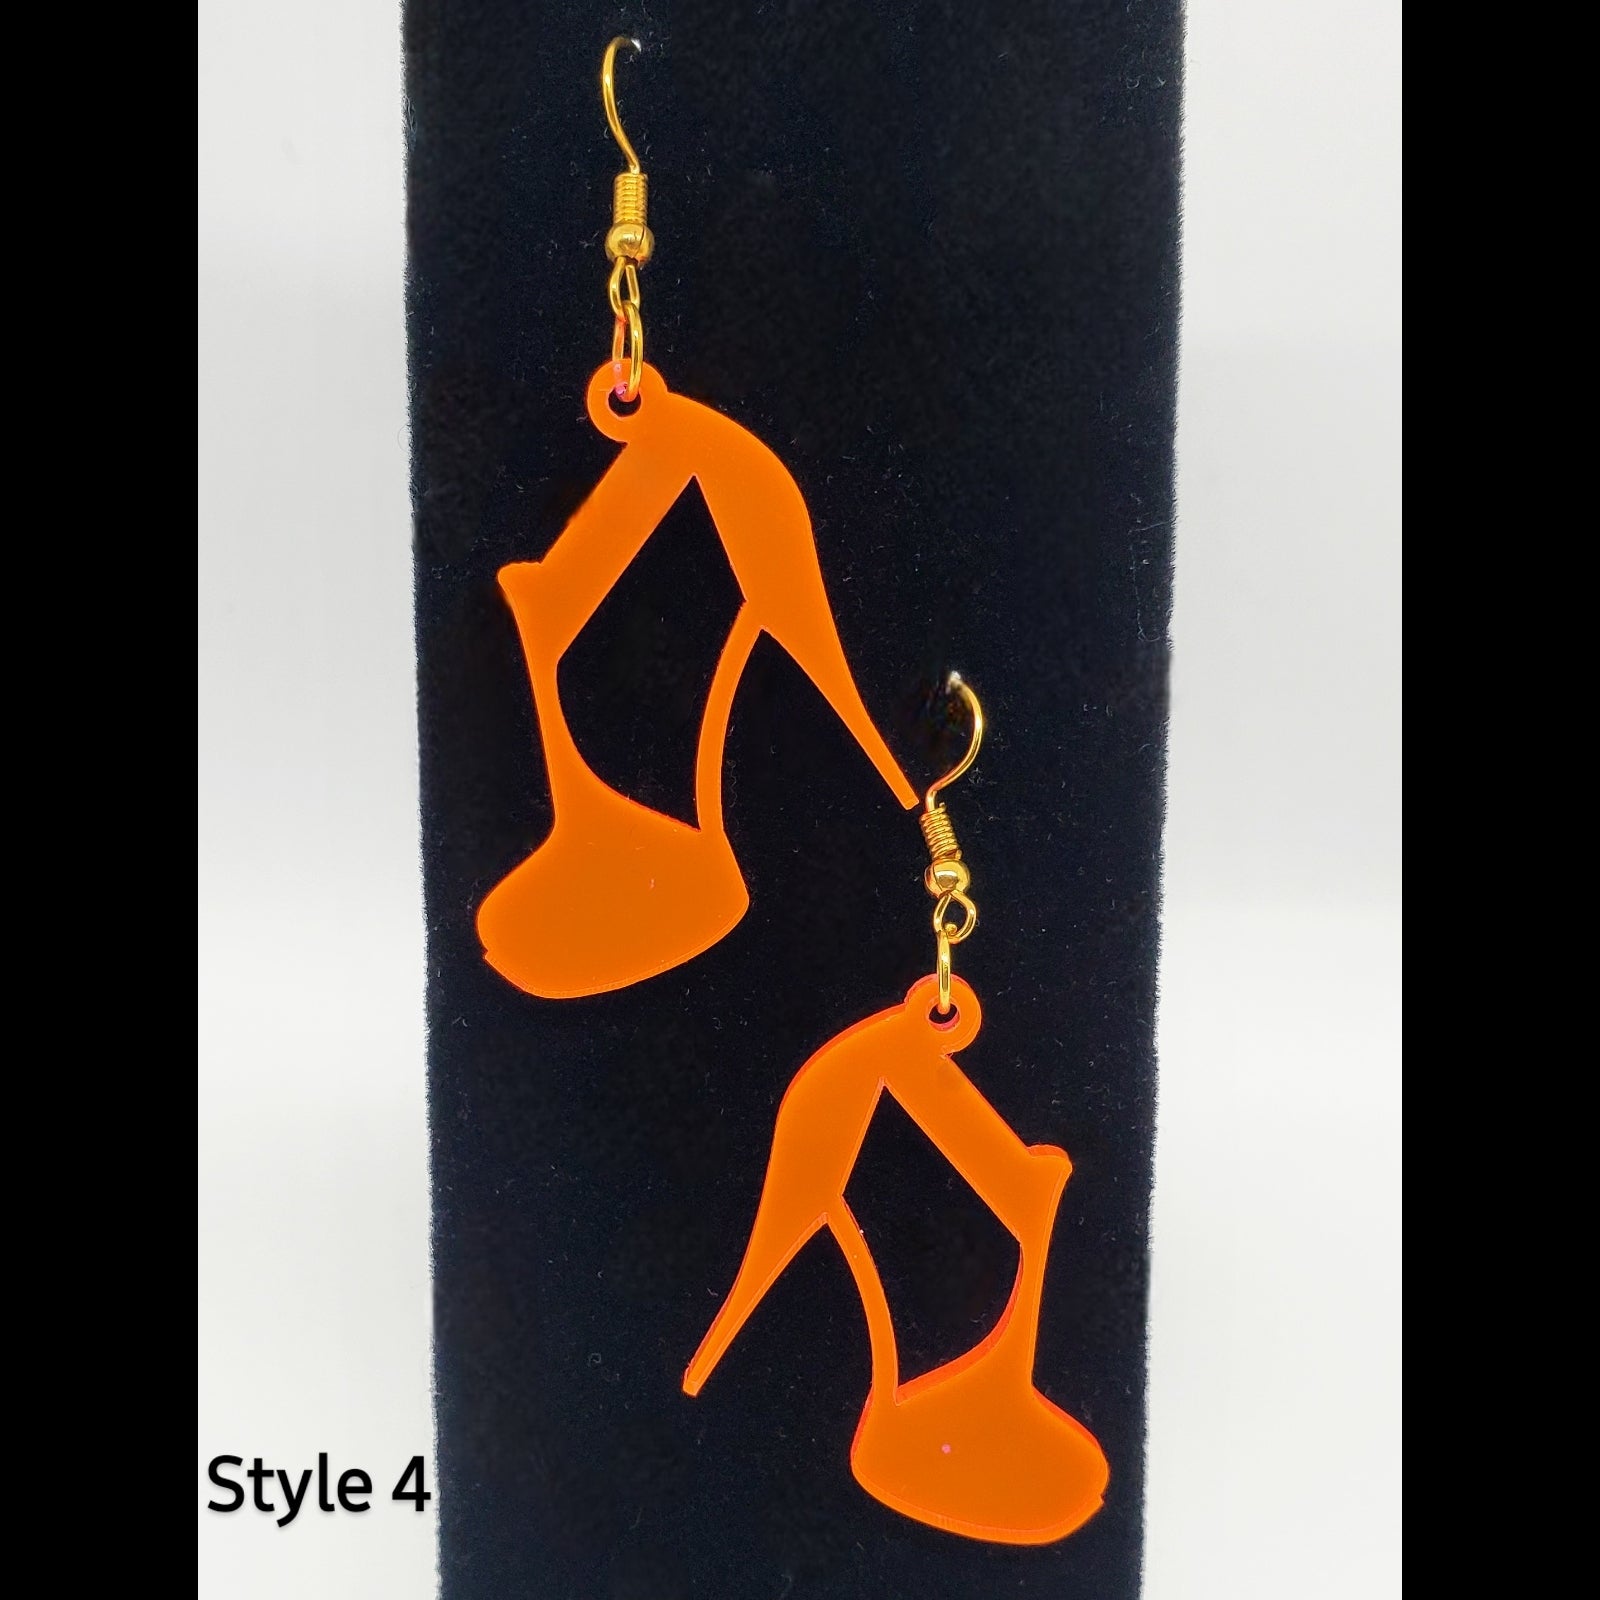 Orange strapped heel acrylic shoe earrings on stand